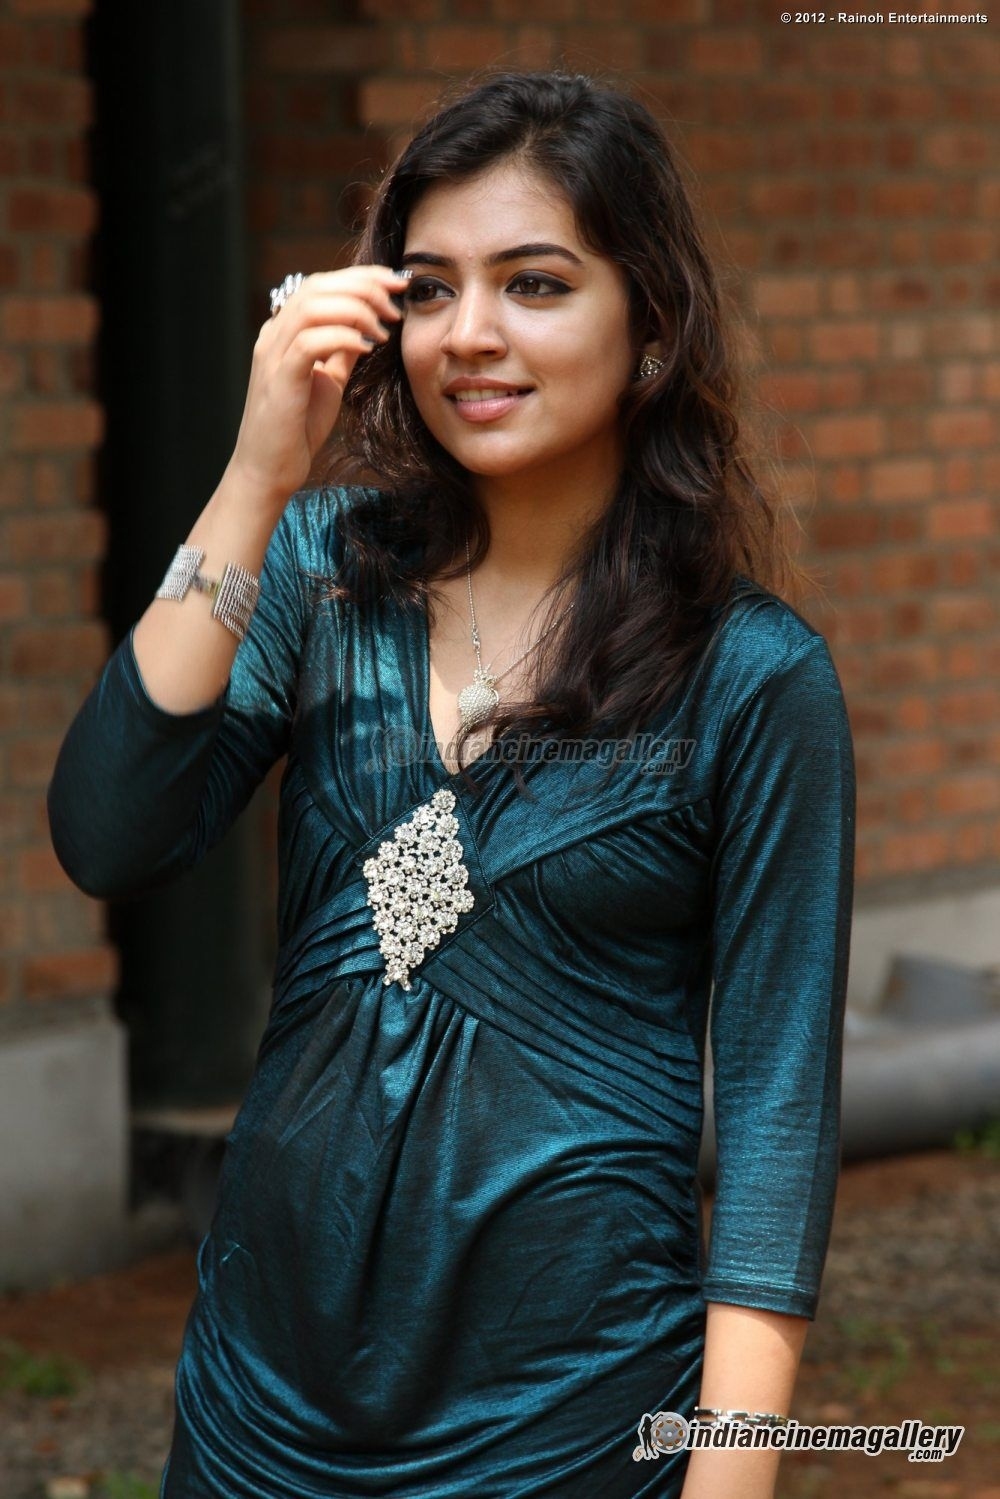 Indian Actresses Without Makeup 2012 Wavy Haircut